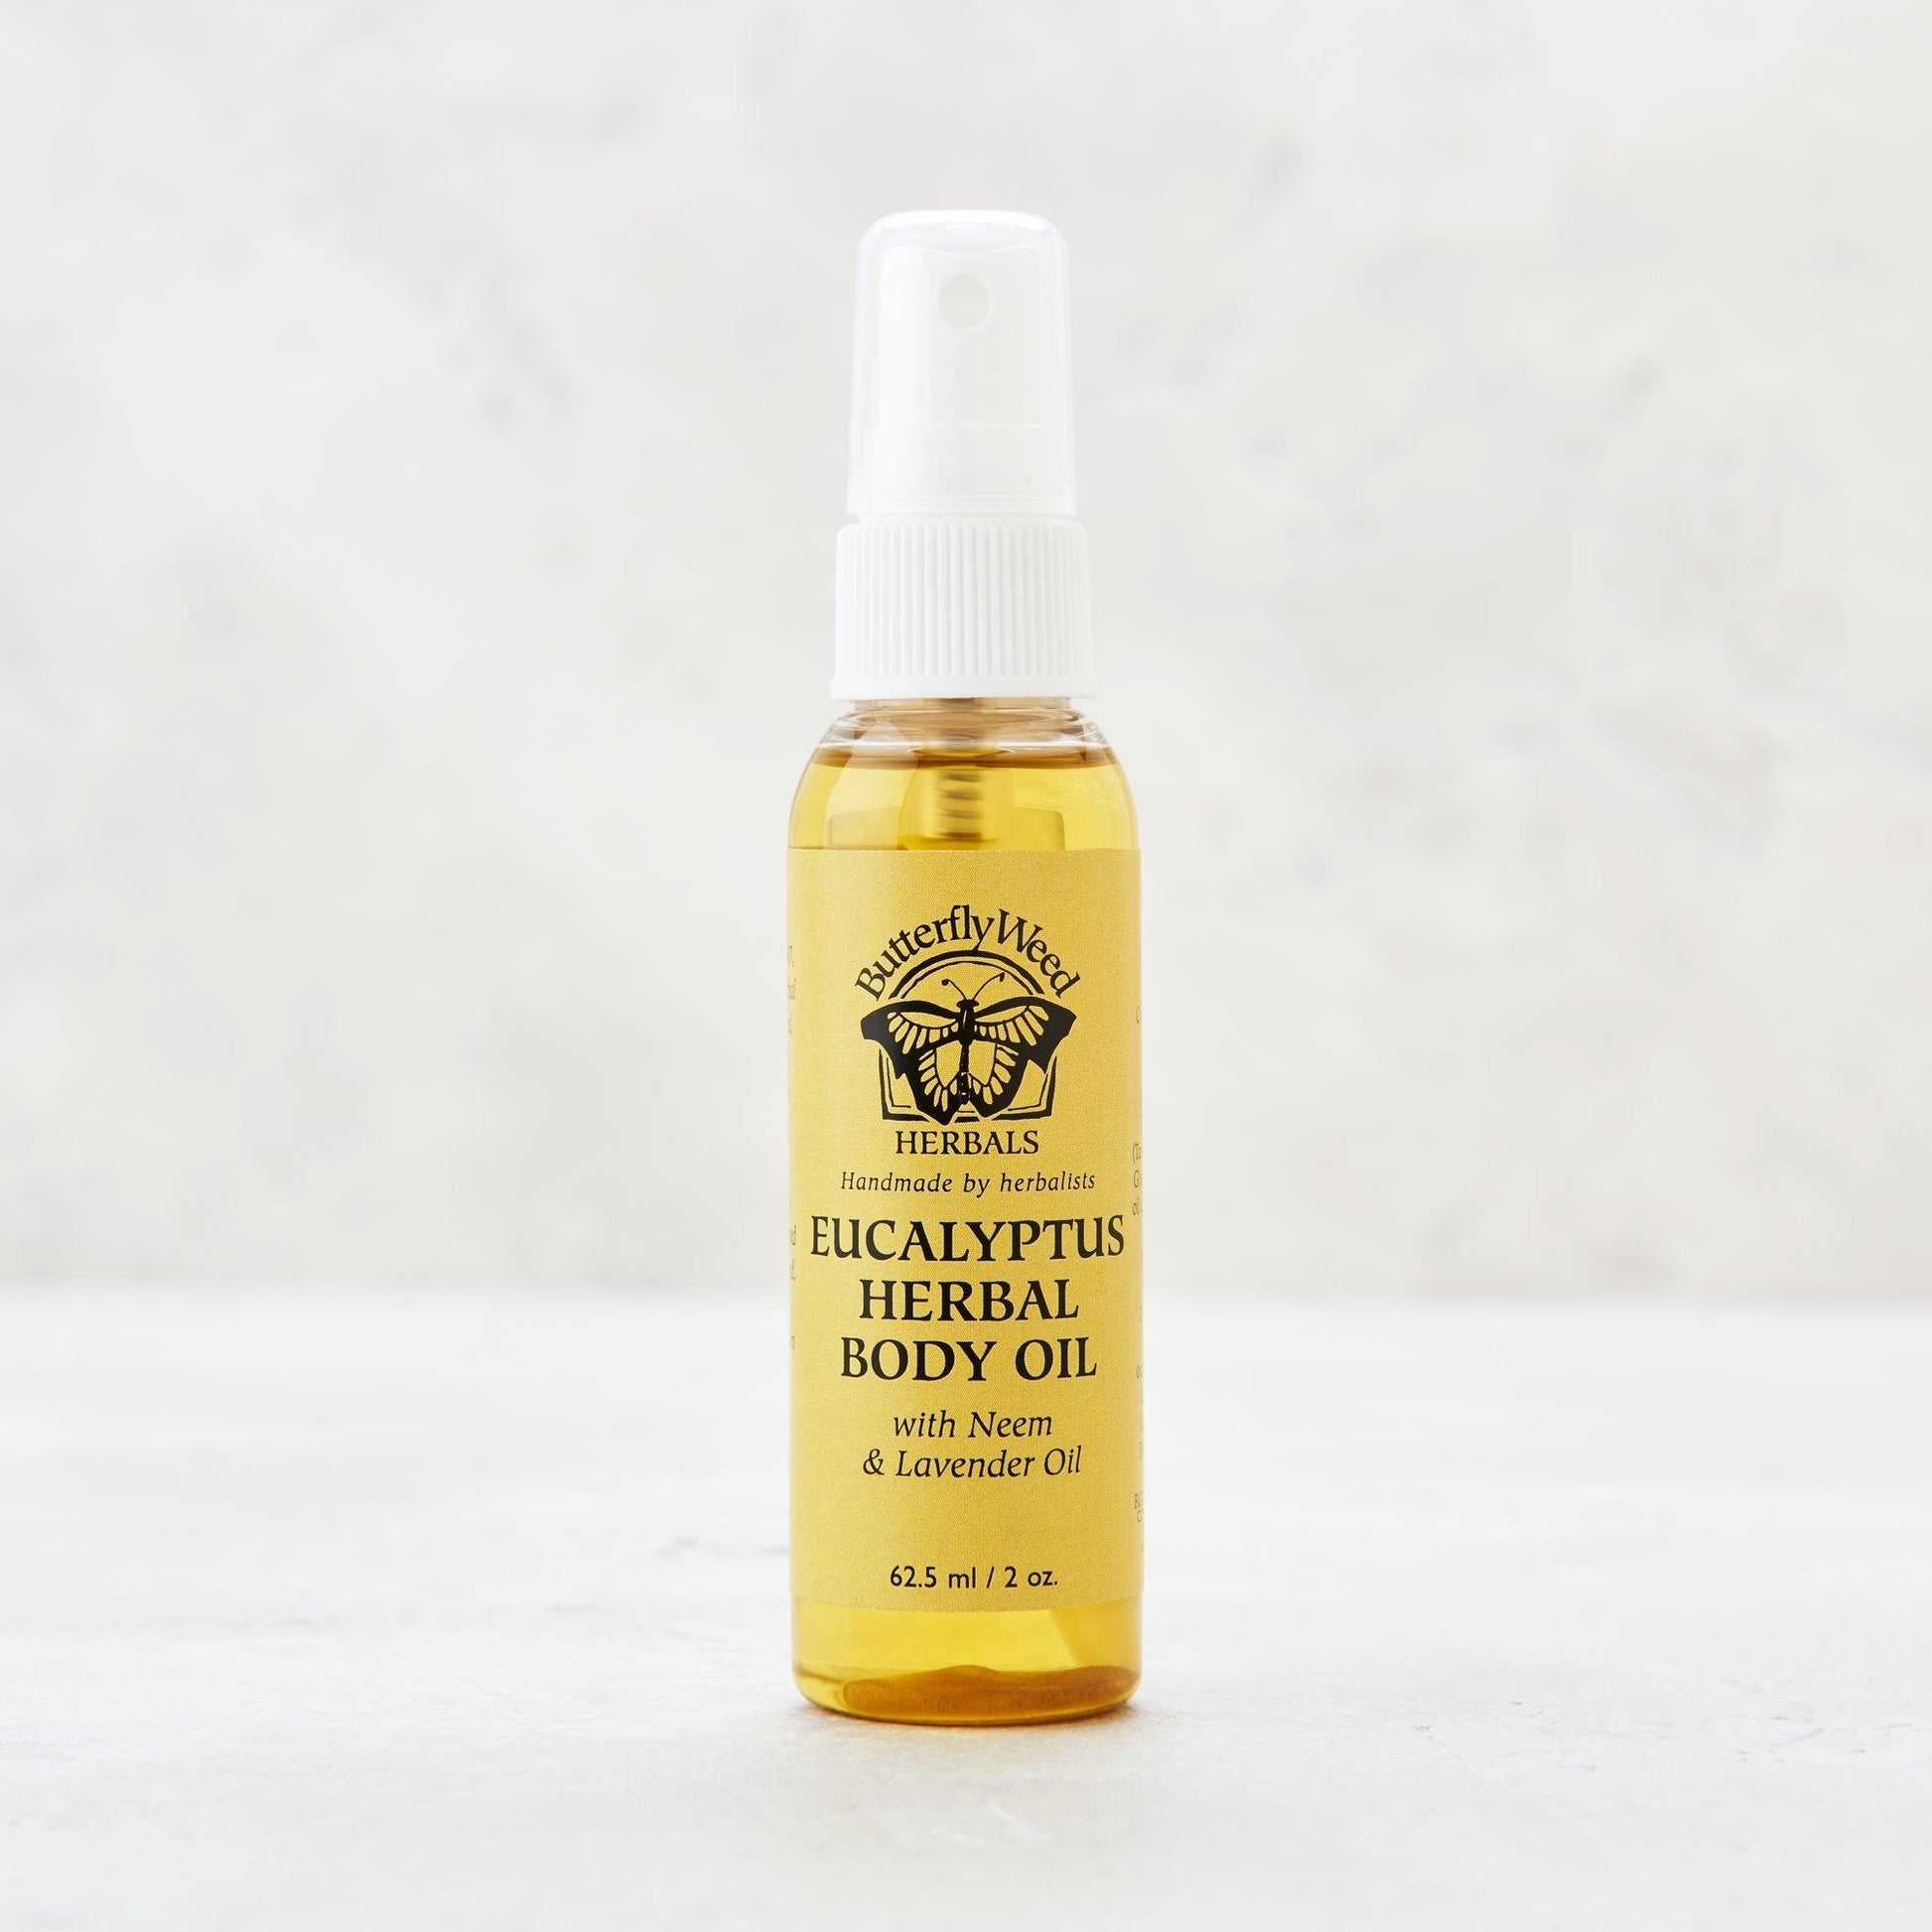 EUCALYPTUS BODY OIL - natural bug spray Bath and Body Matter 62.6ml / 2oz in sprayer bottle Prettycleanshop